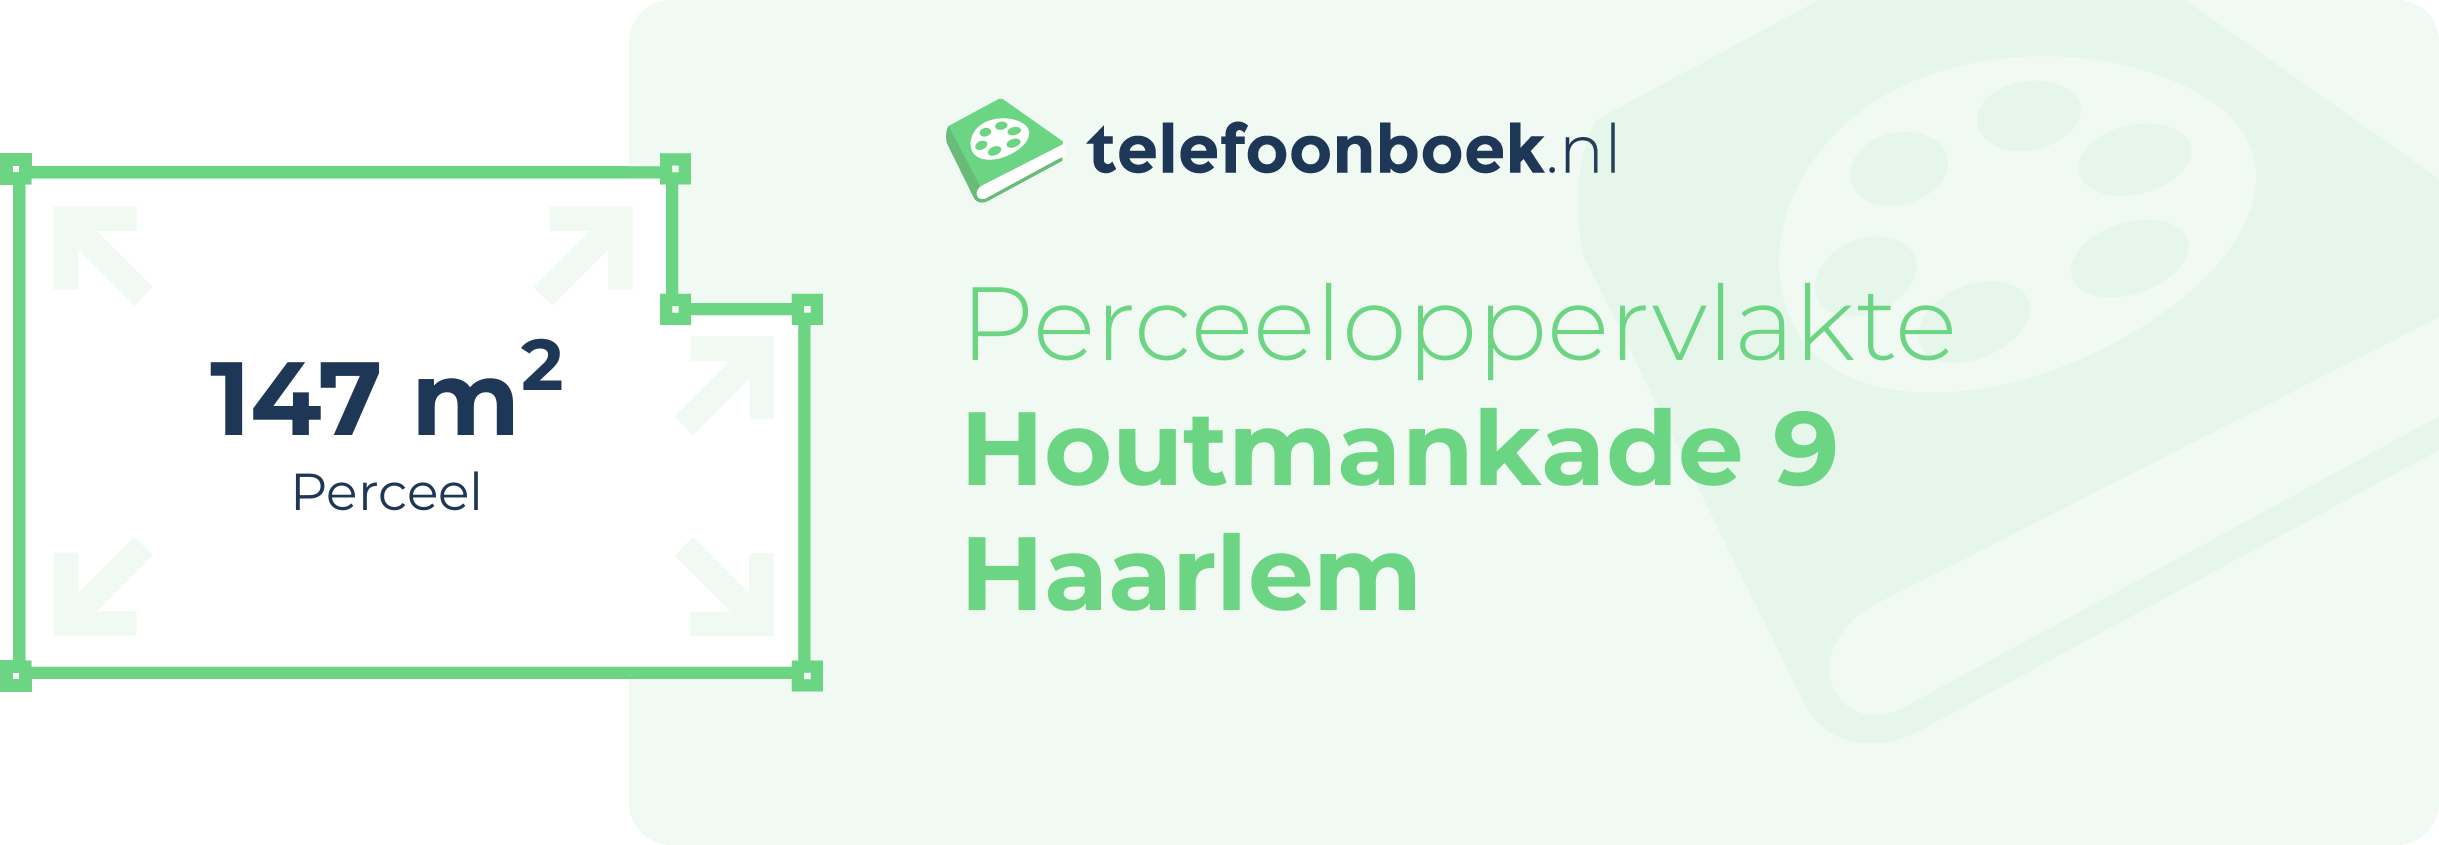 Perceeloppervlakte Houtmankade 9 Haarlem